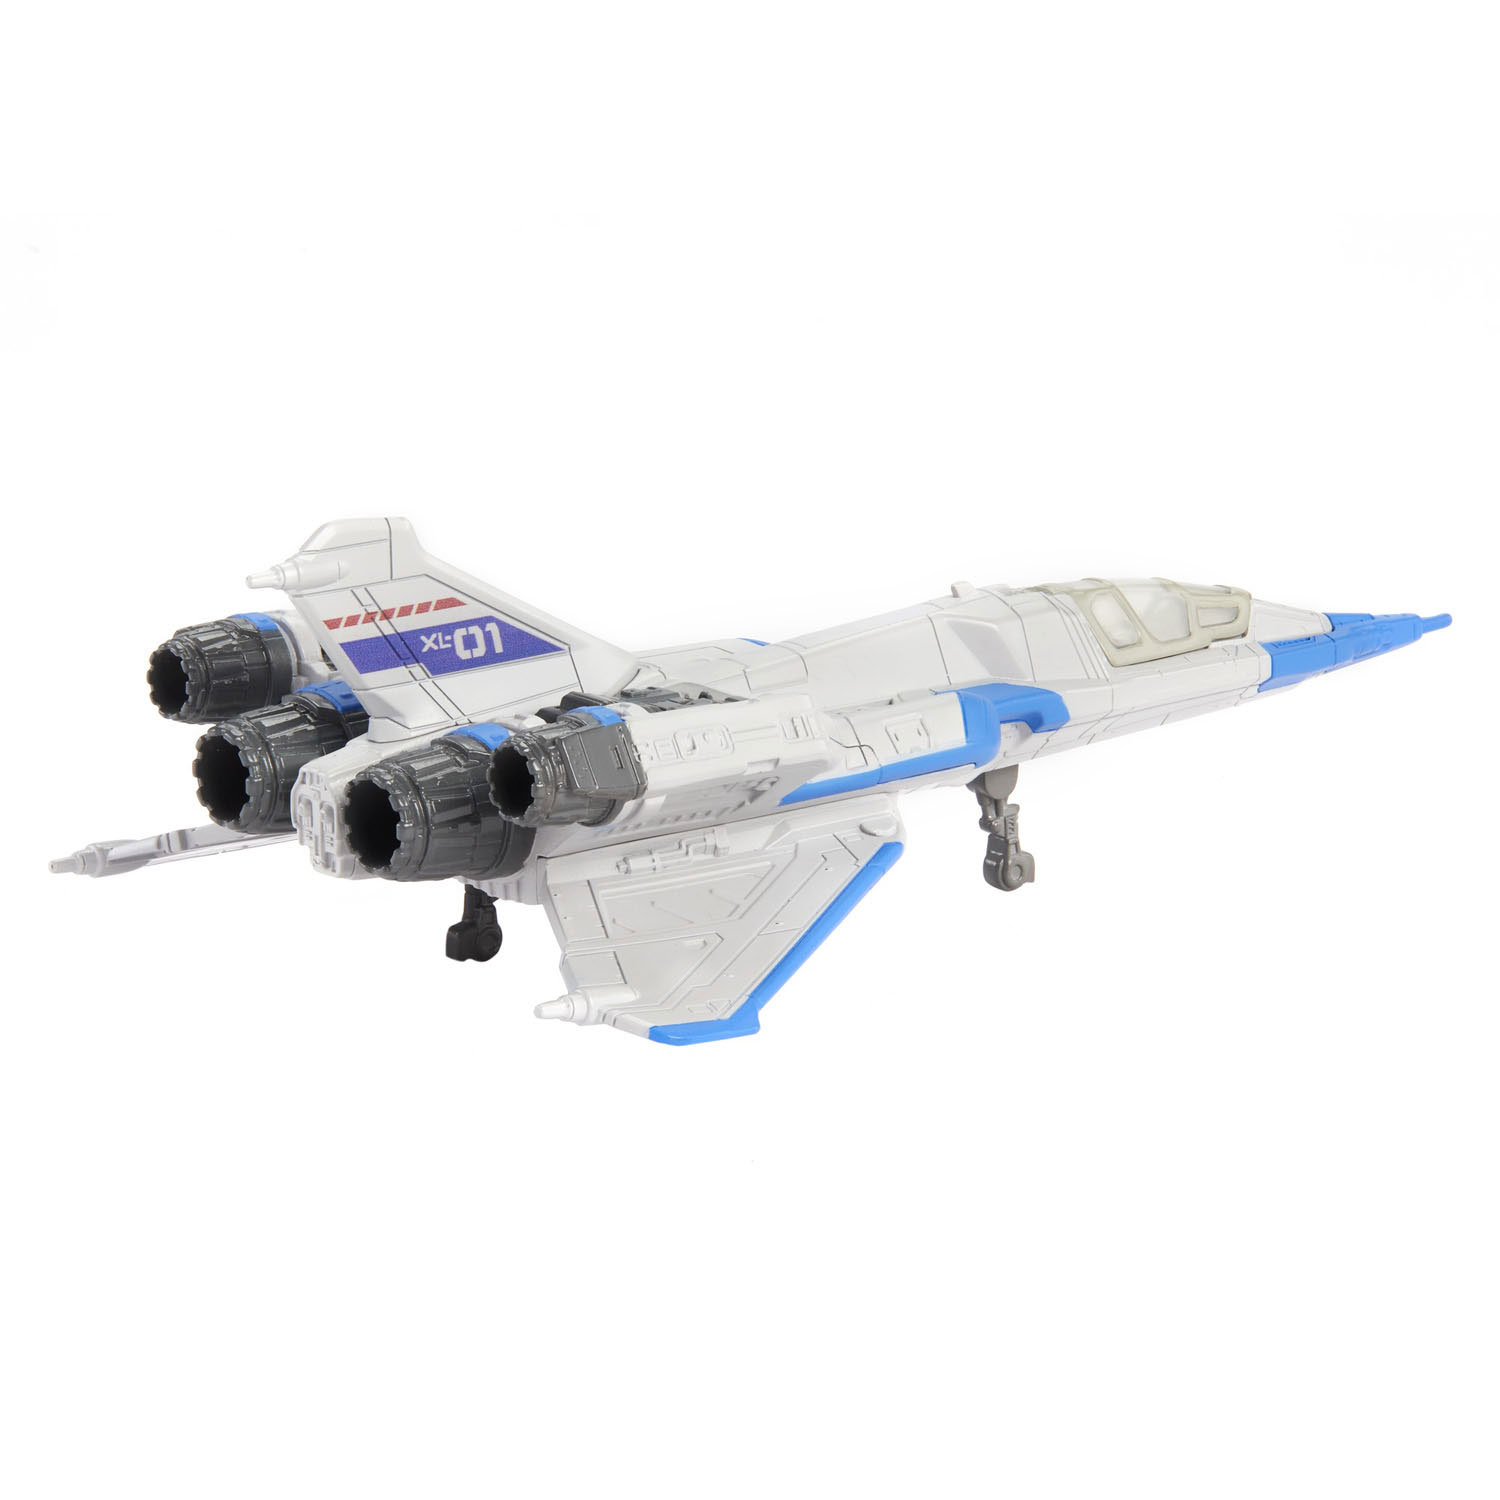 Disney Buzz l'Éclair Flight Buzz + Xl-01 Spaceship Avion